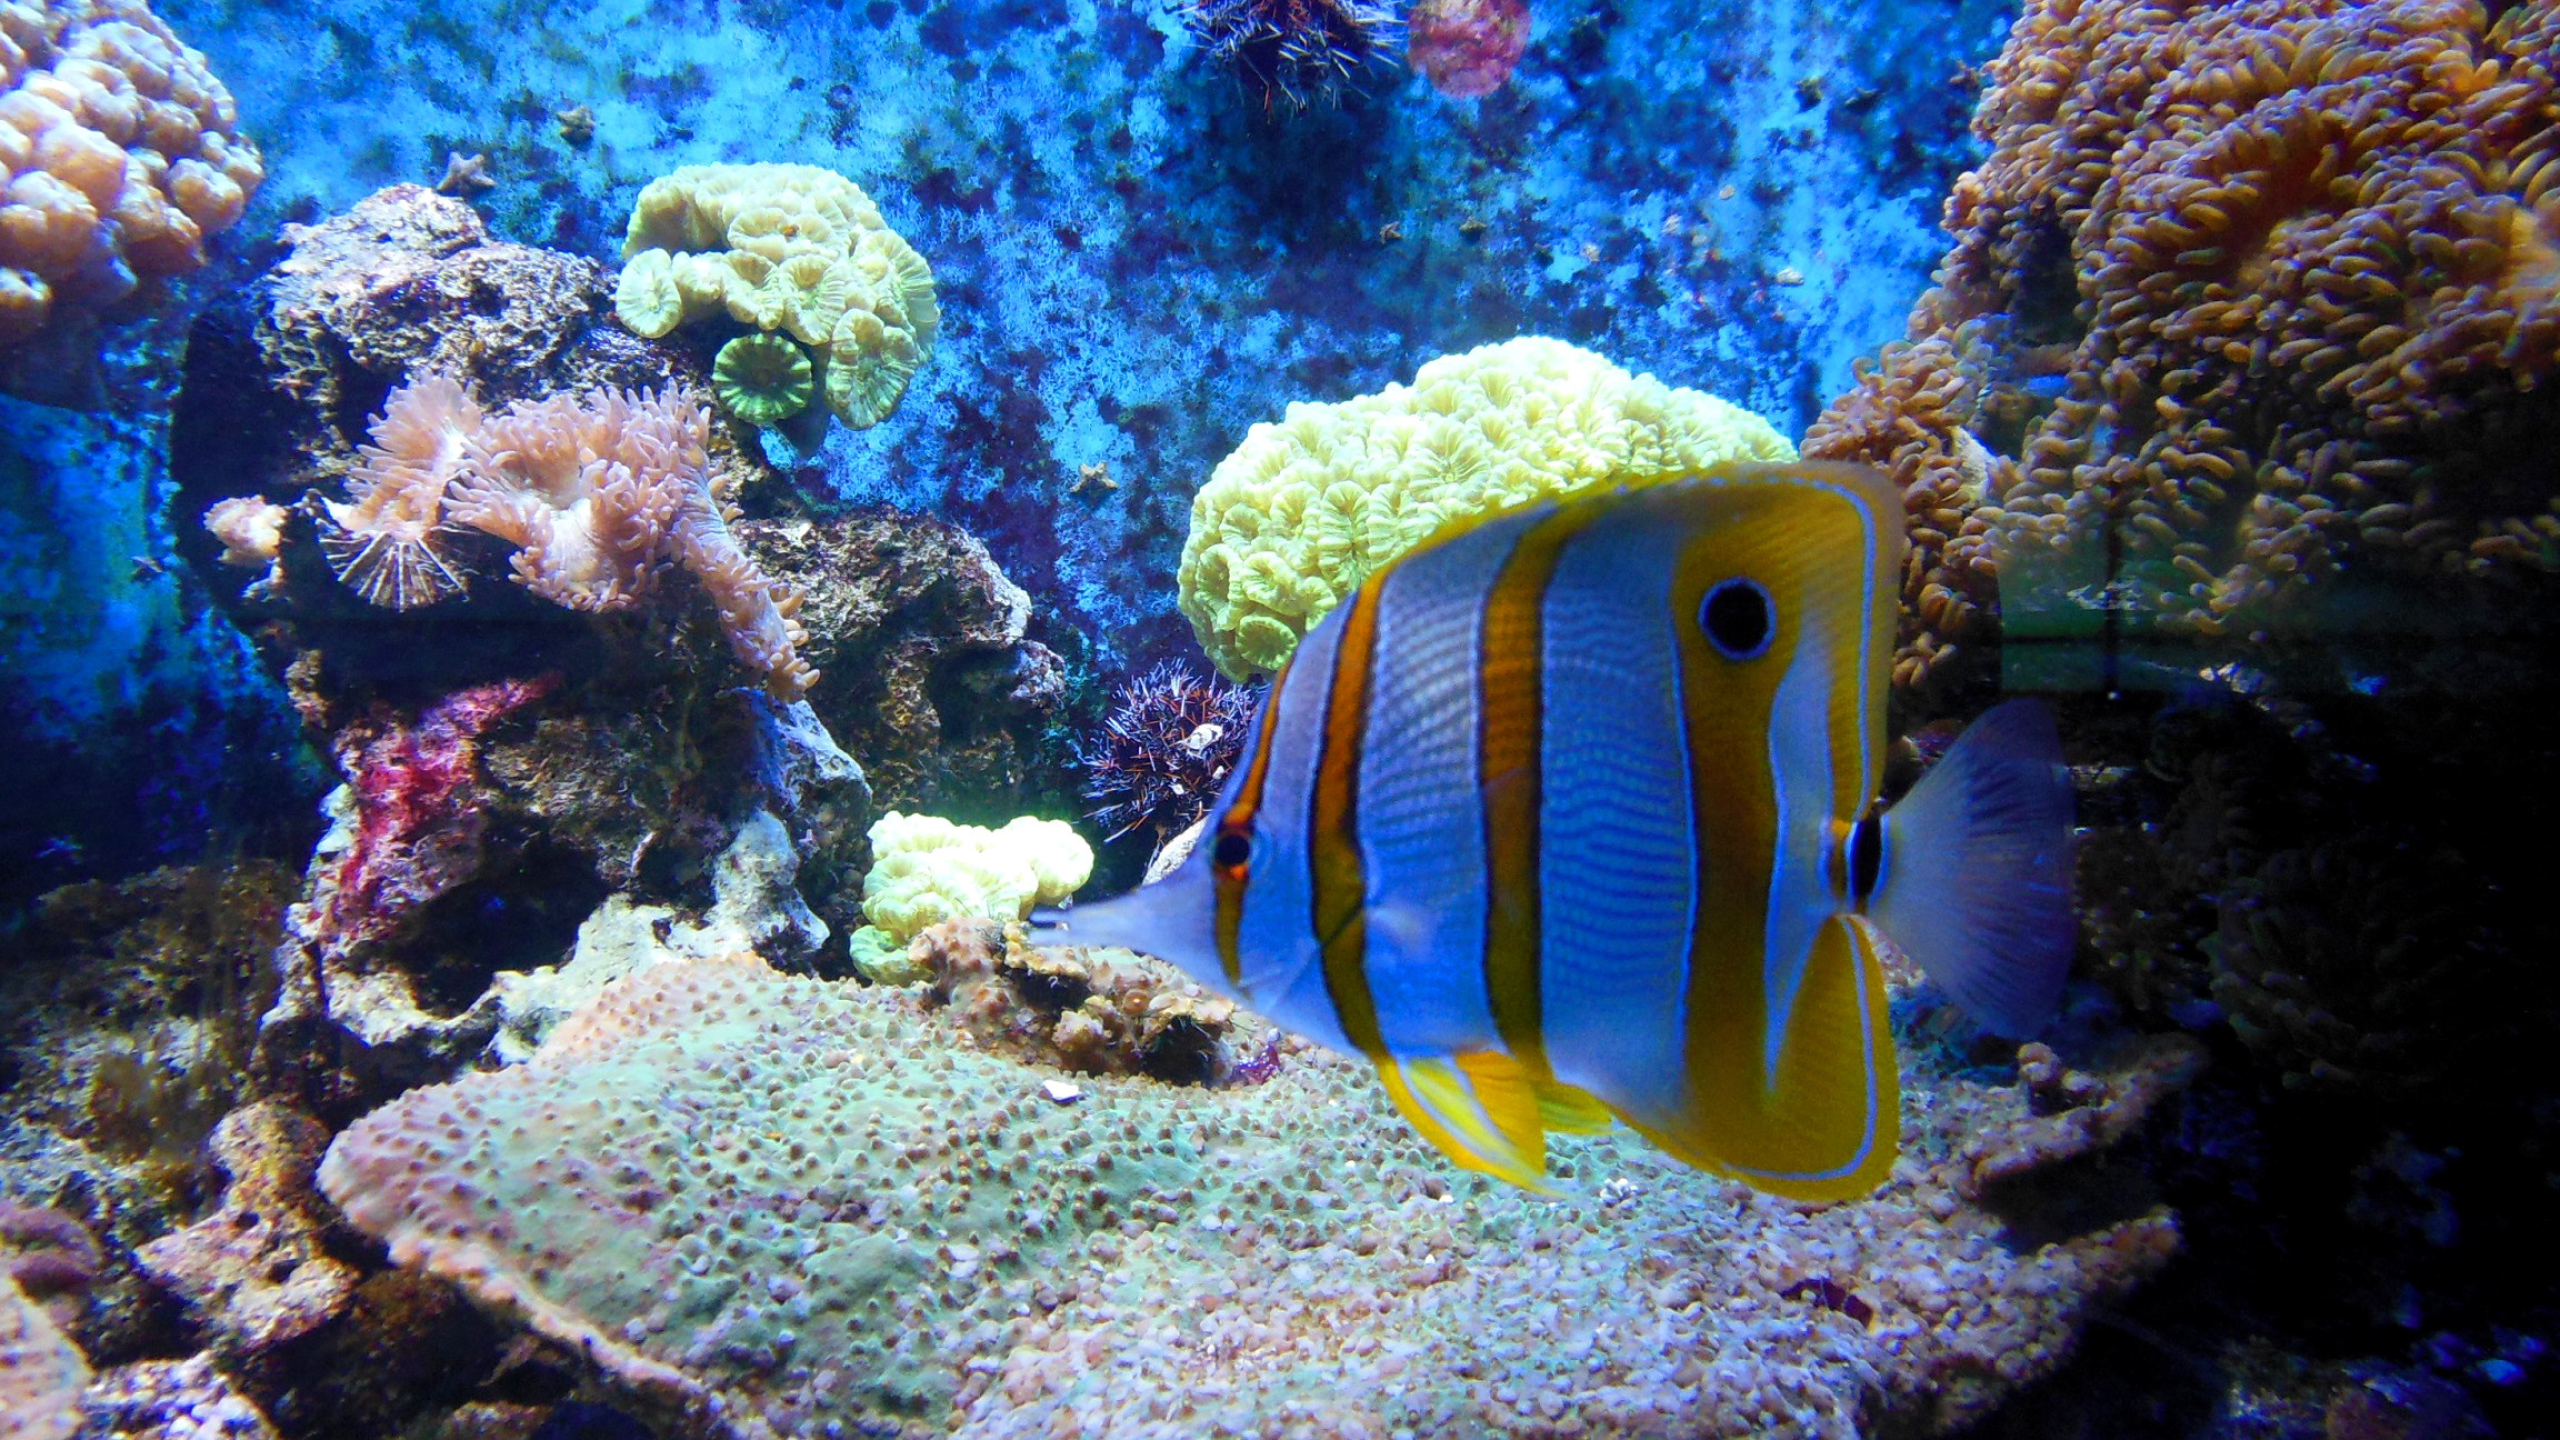 Tropical fish and anemones, HD wallpaper, Underwater wonders, Captivating marine life, 2560x1440 HD Desktop